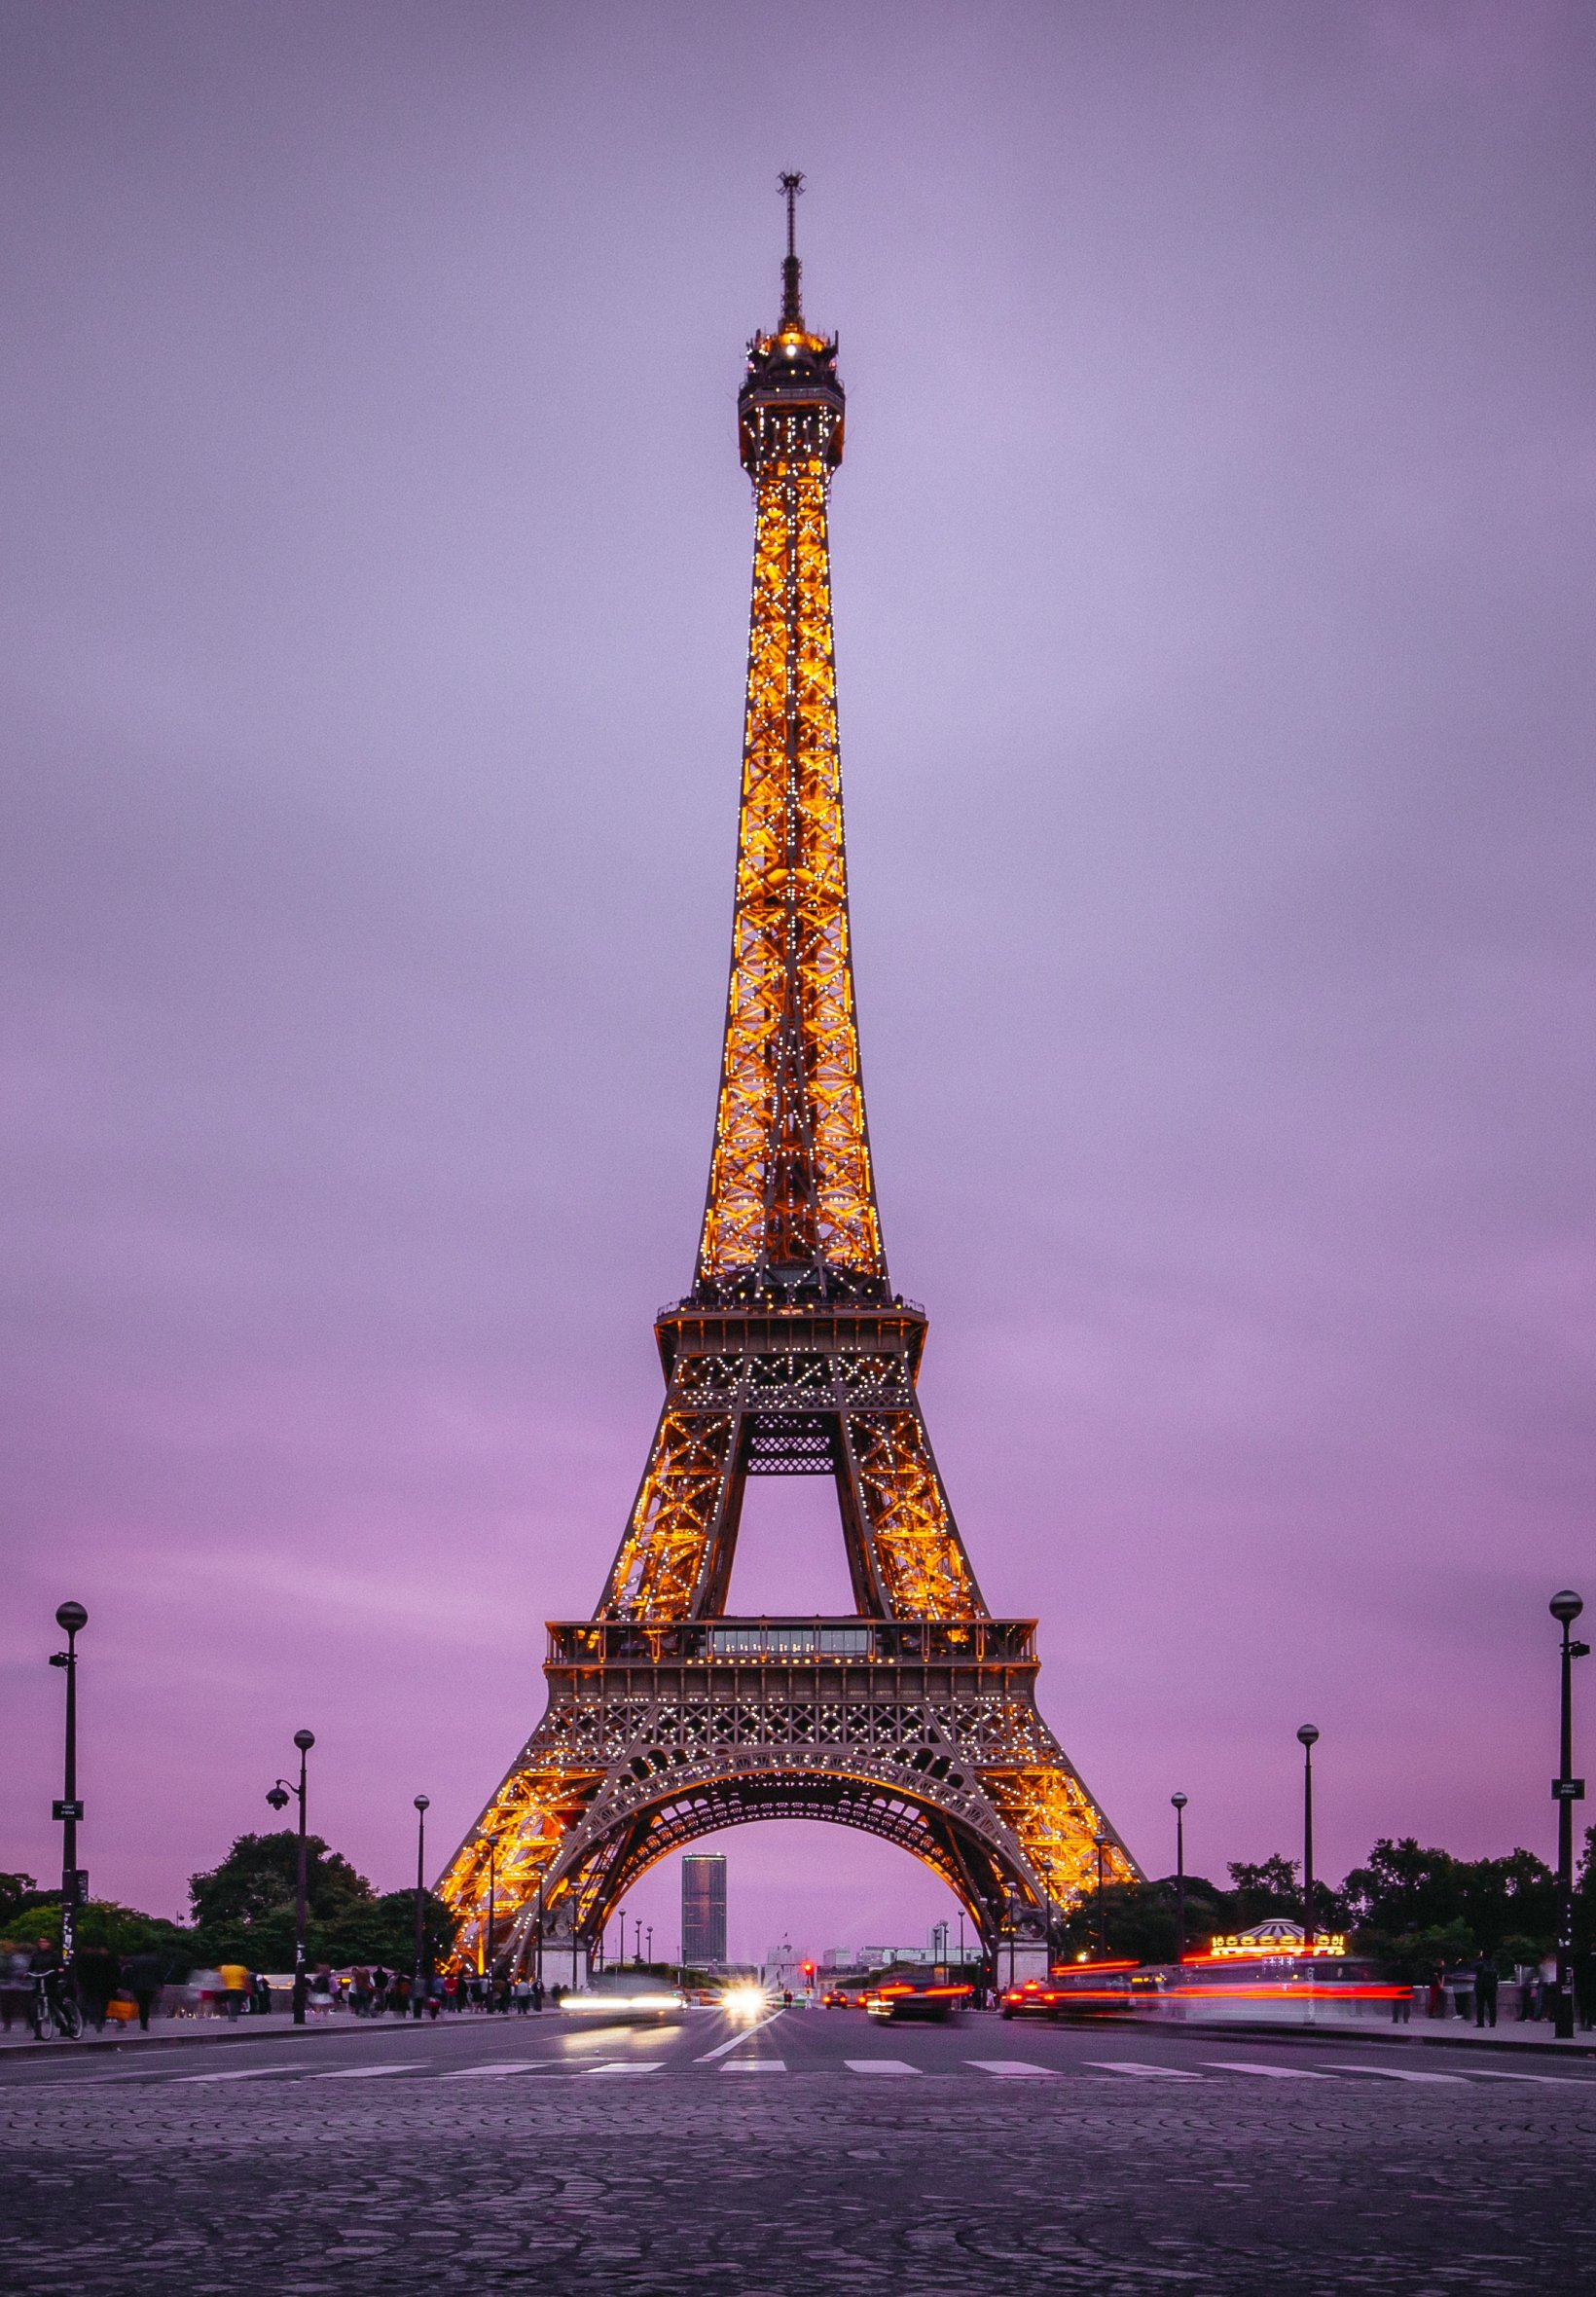 Pink Paris France Wallpapers